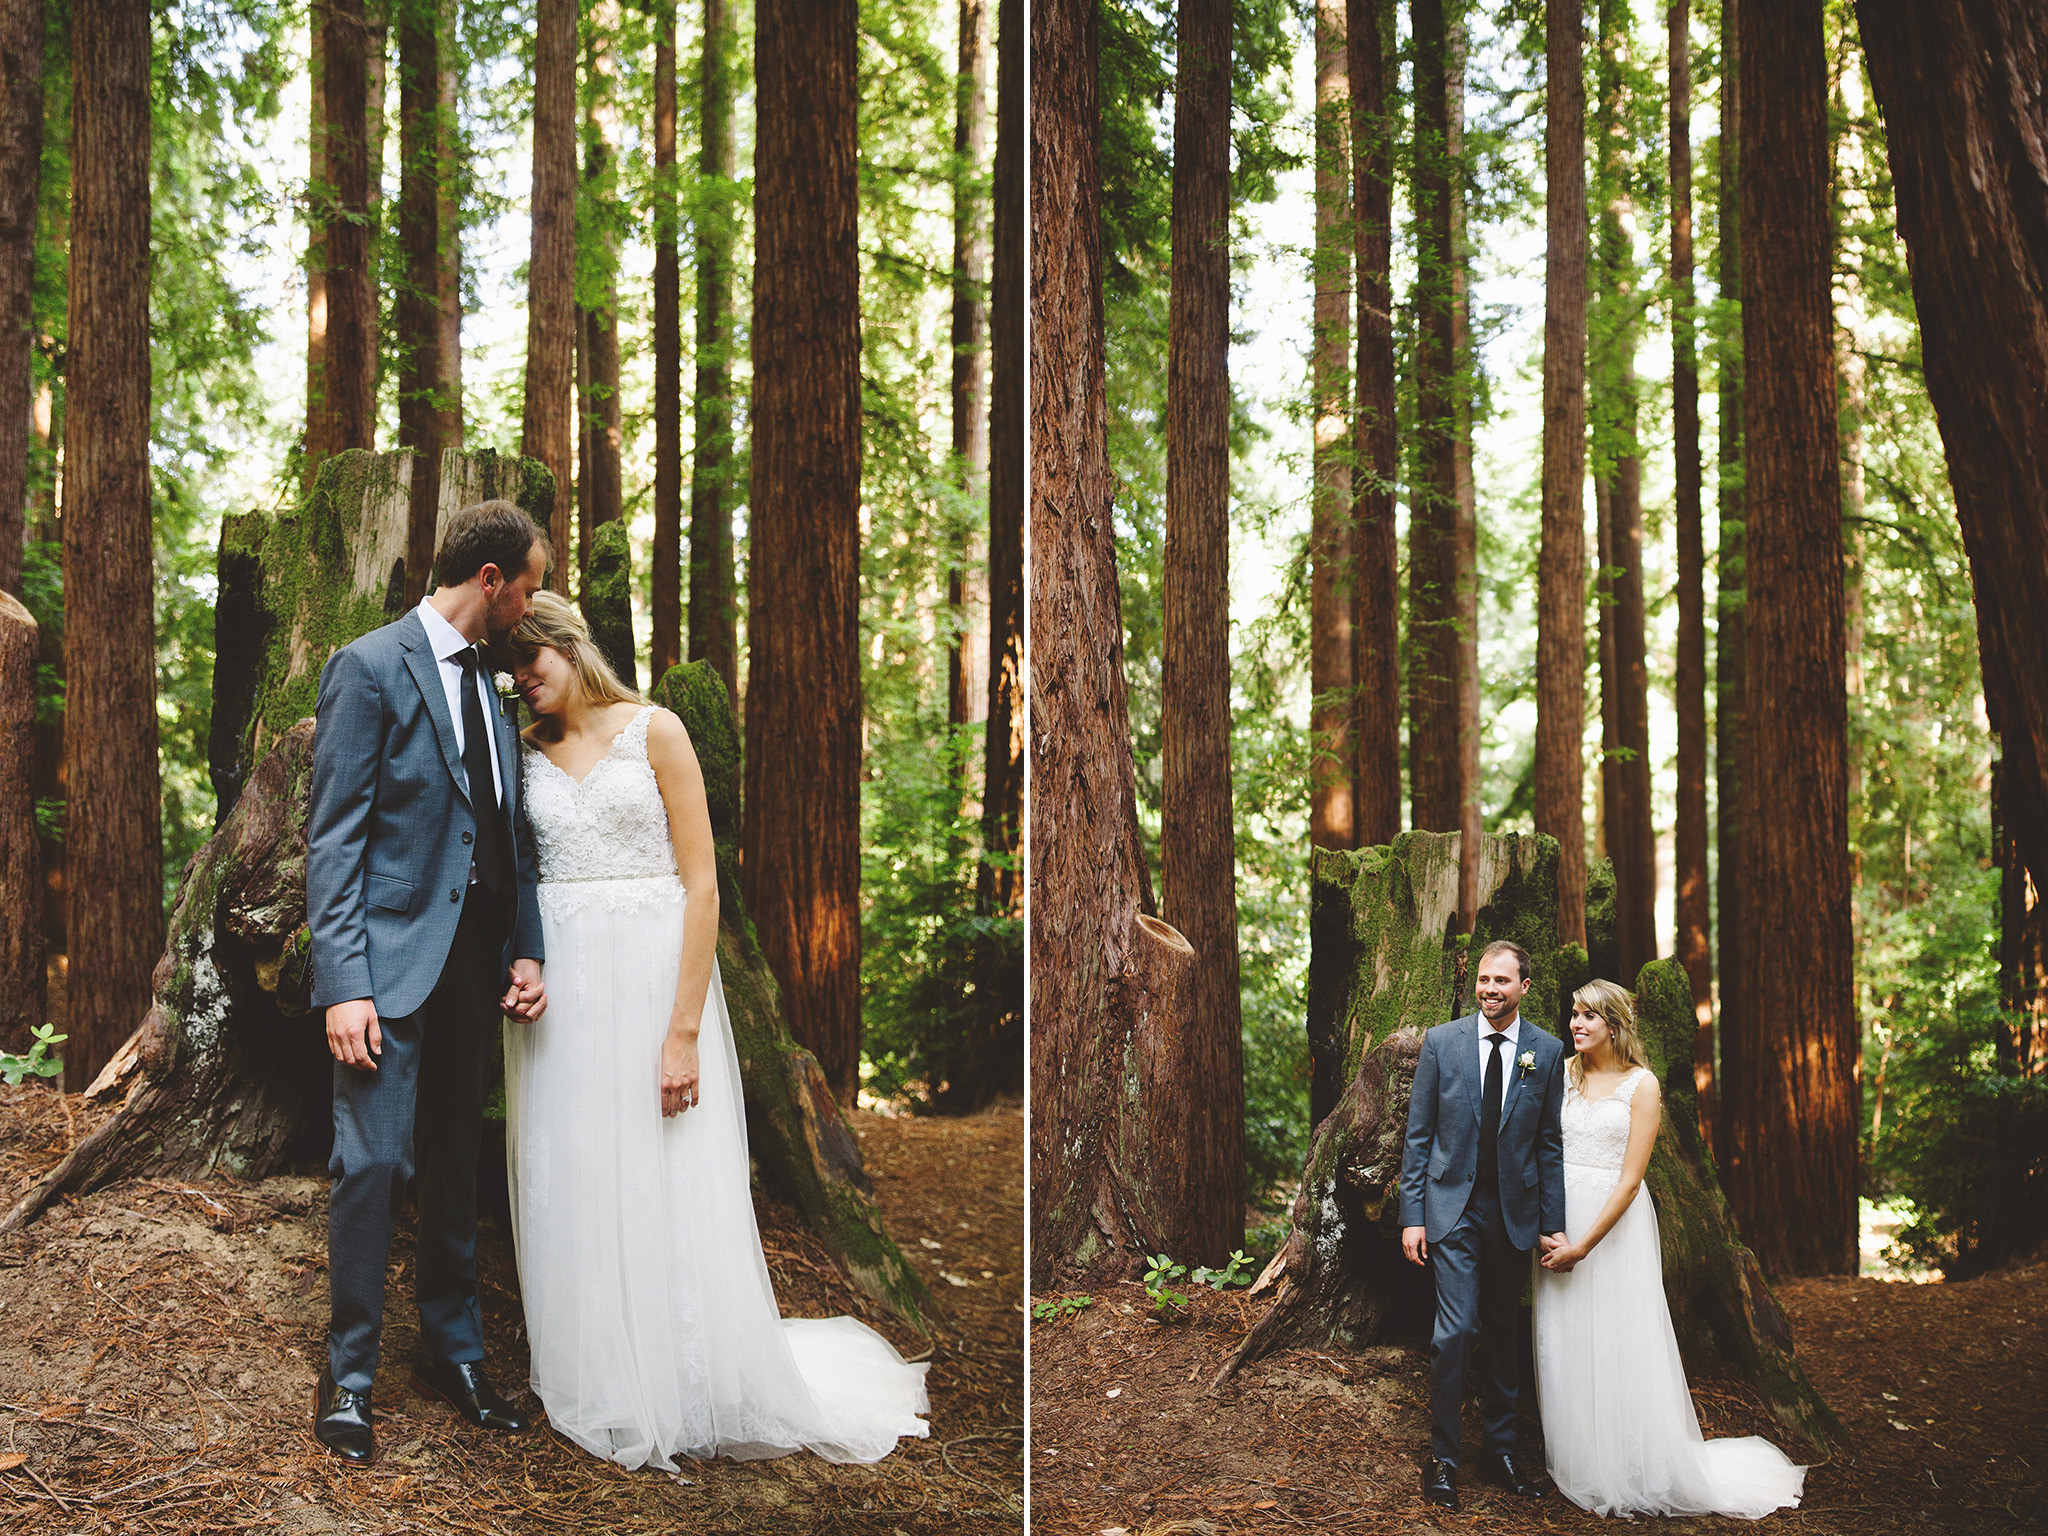 Waterfall Lodge and Retreat redwood wedding portraits